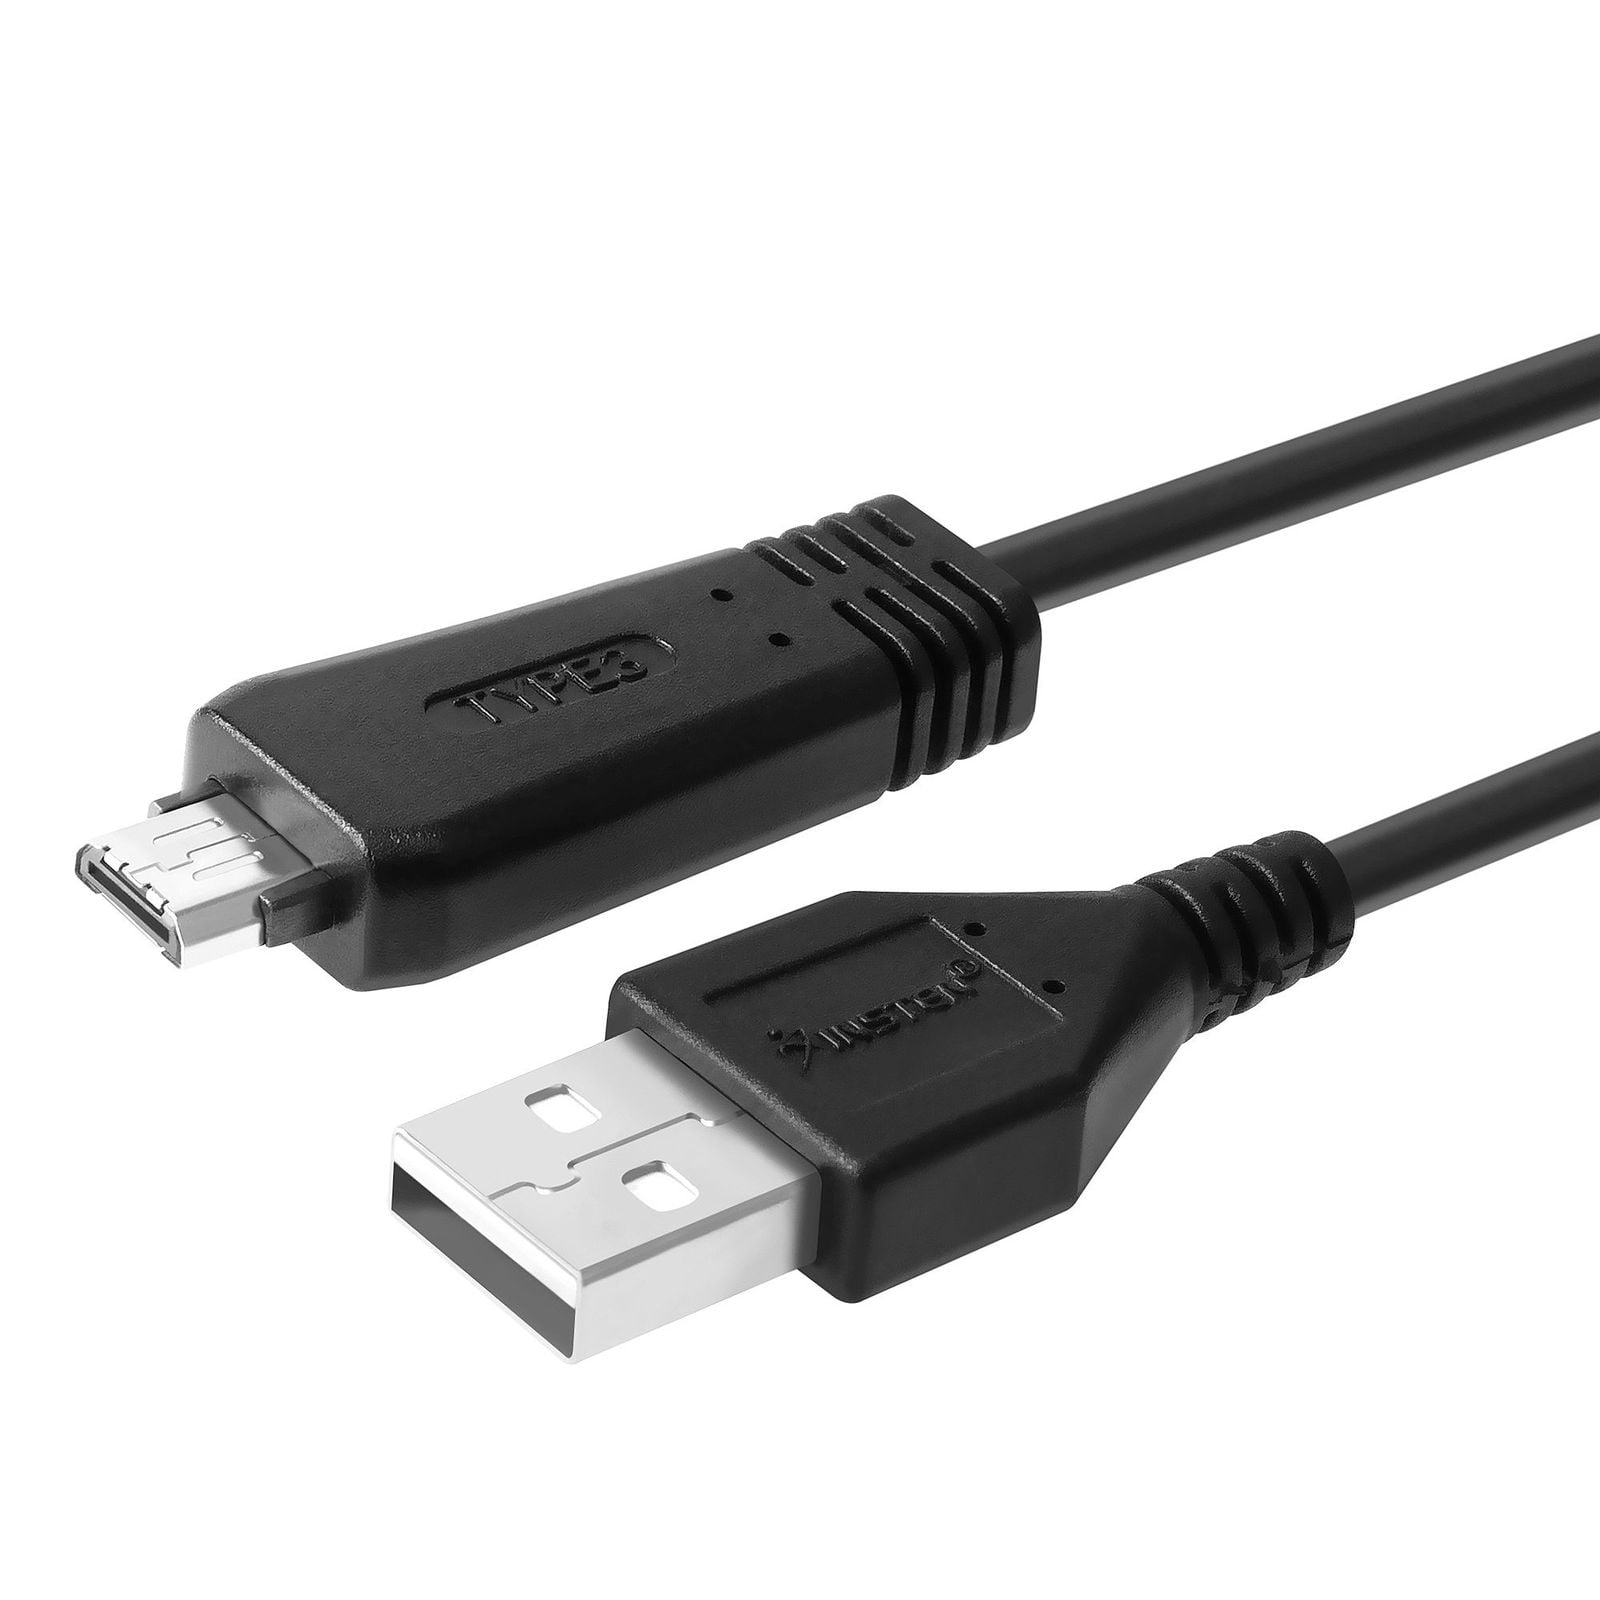 Sony Cyber-Shot DSC-HX20V,DSC-HX20V/B CAMERA REPLACEMENT USB DATA SYNC CABLE 